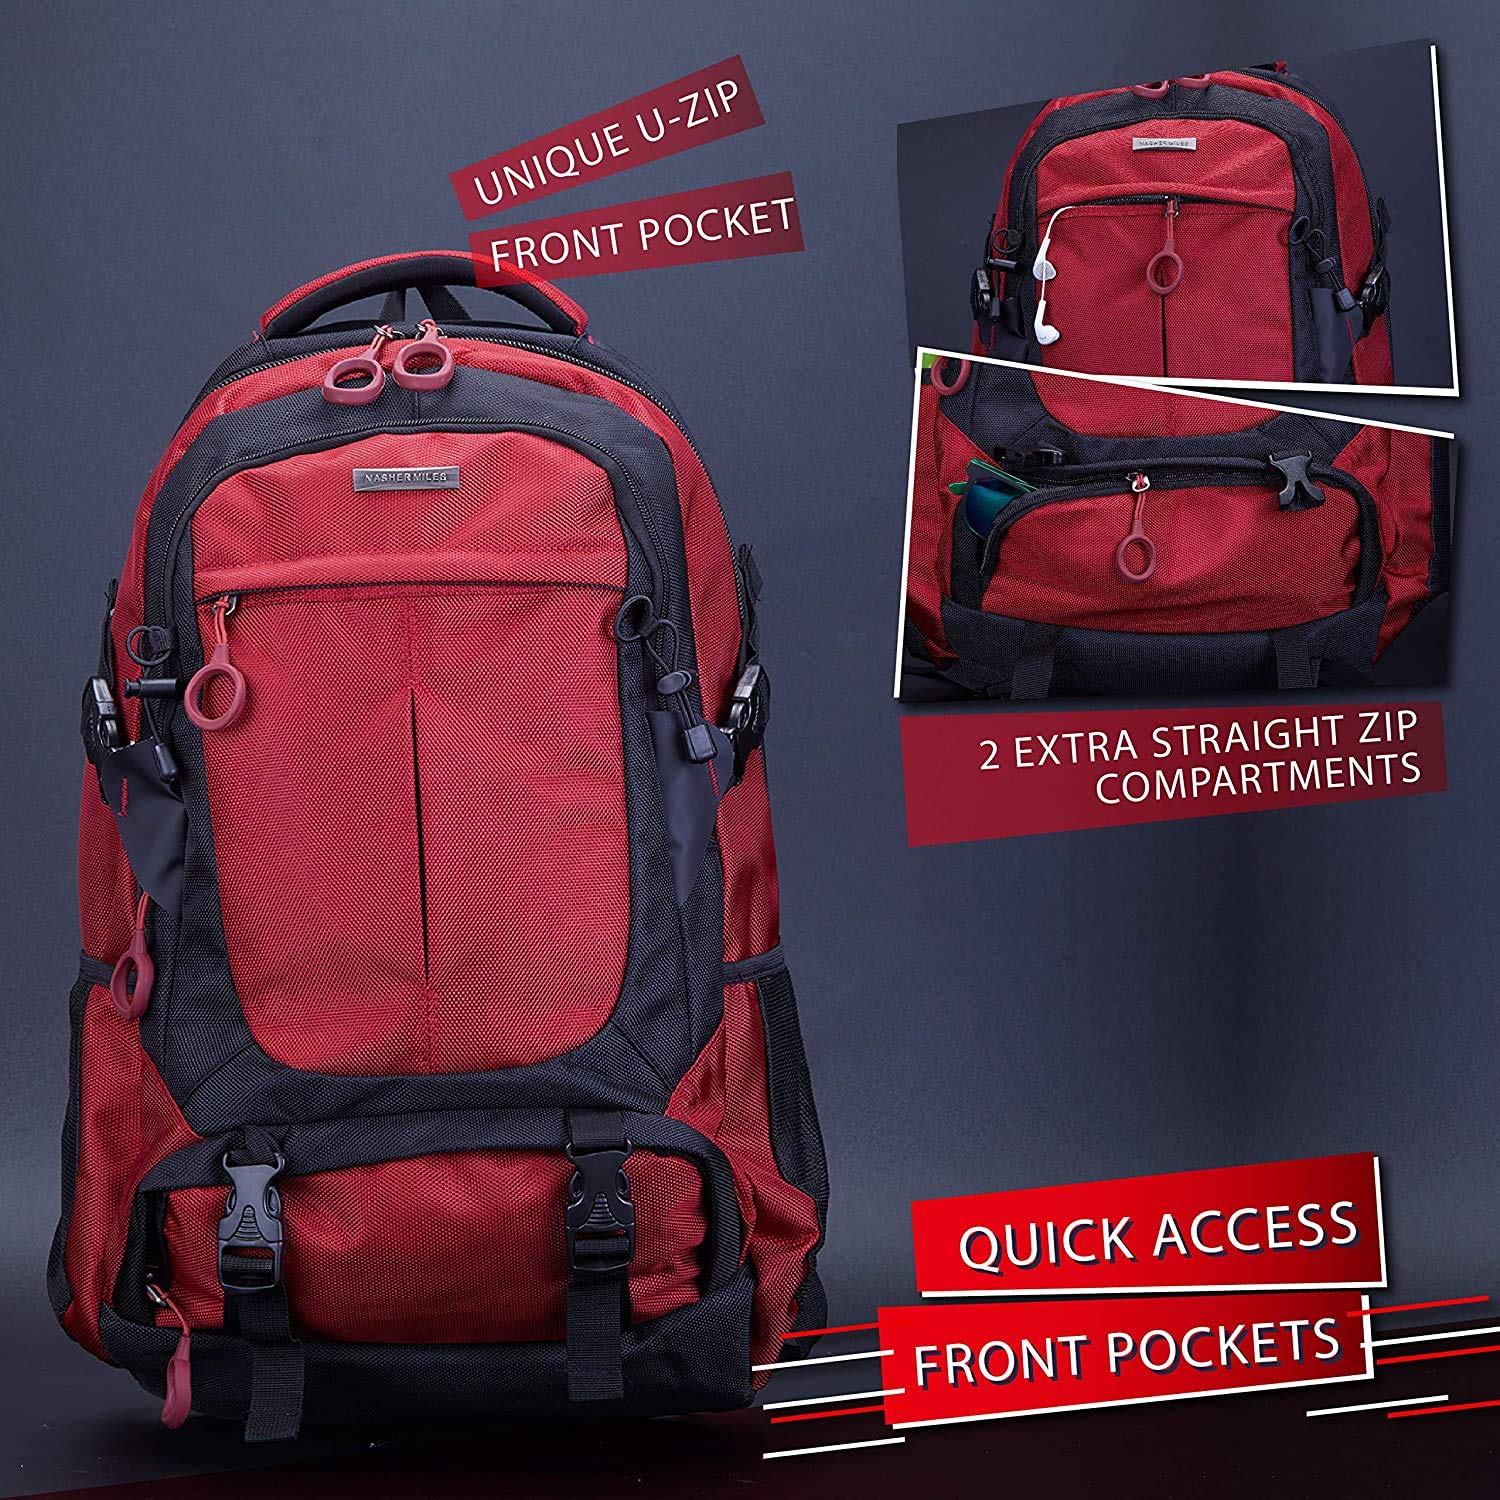 Vigo Outdoor Backpack